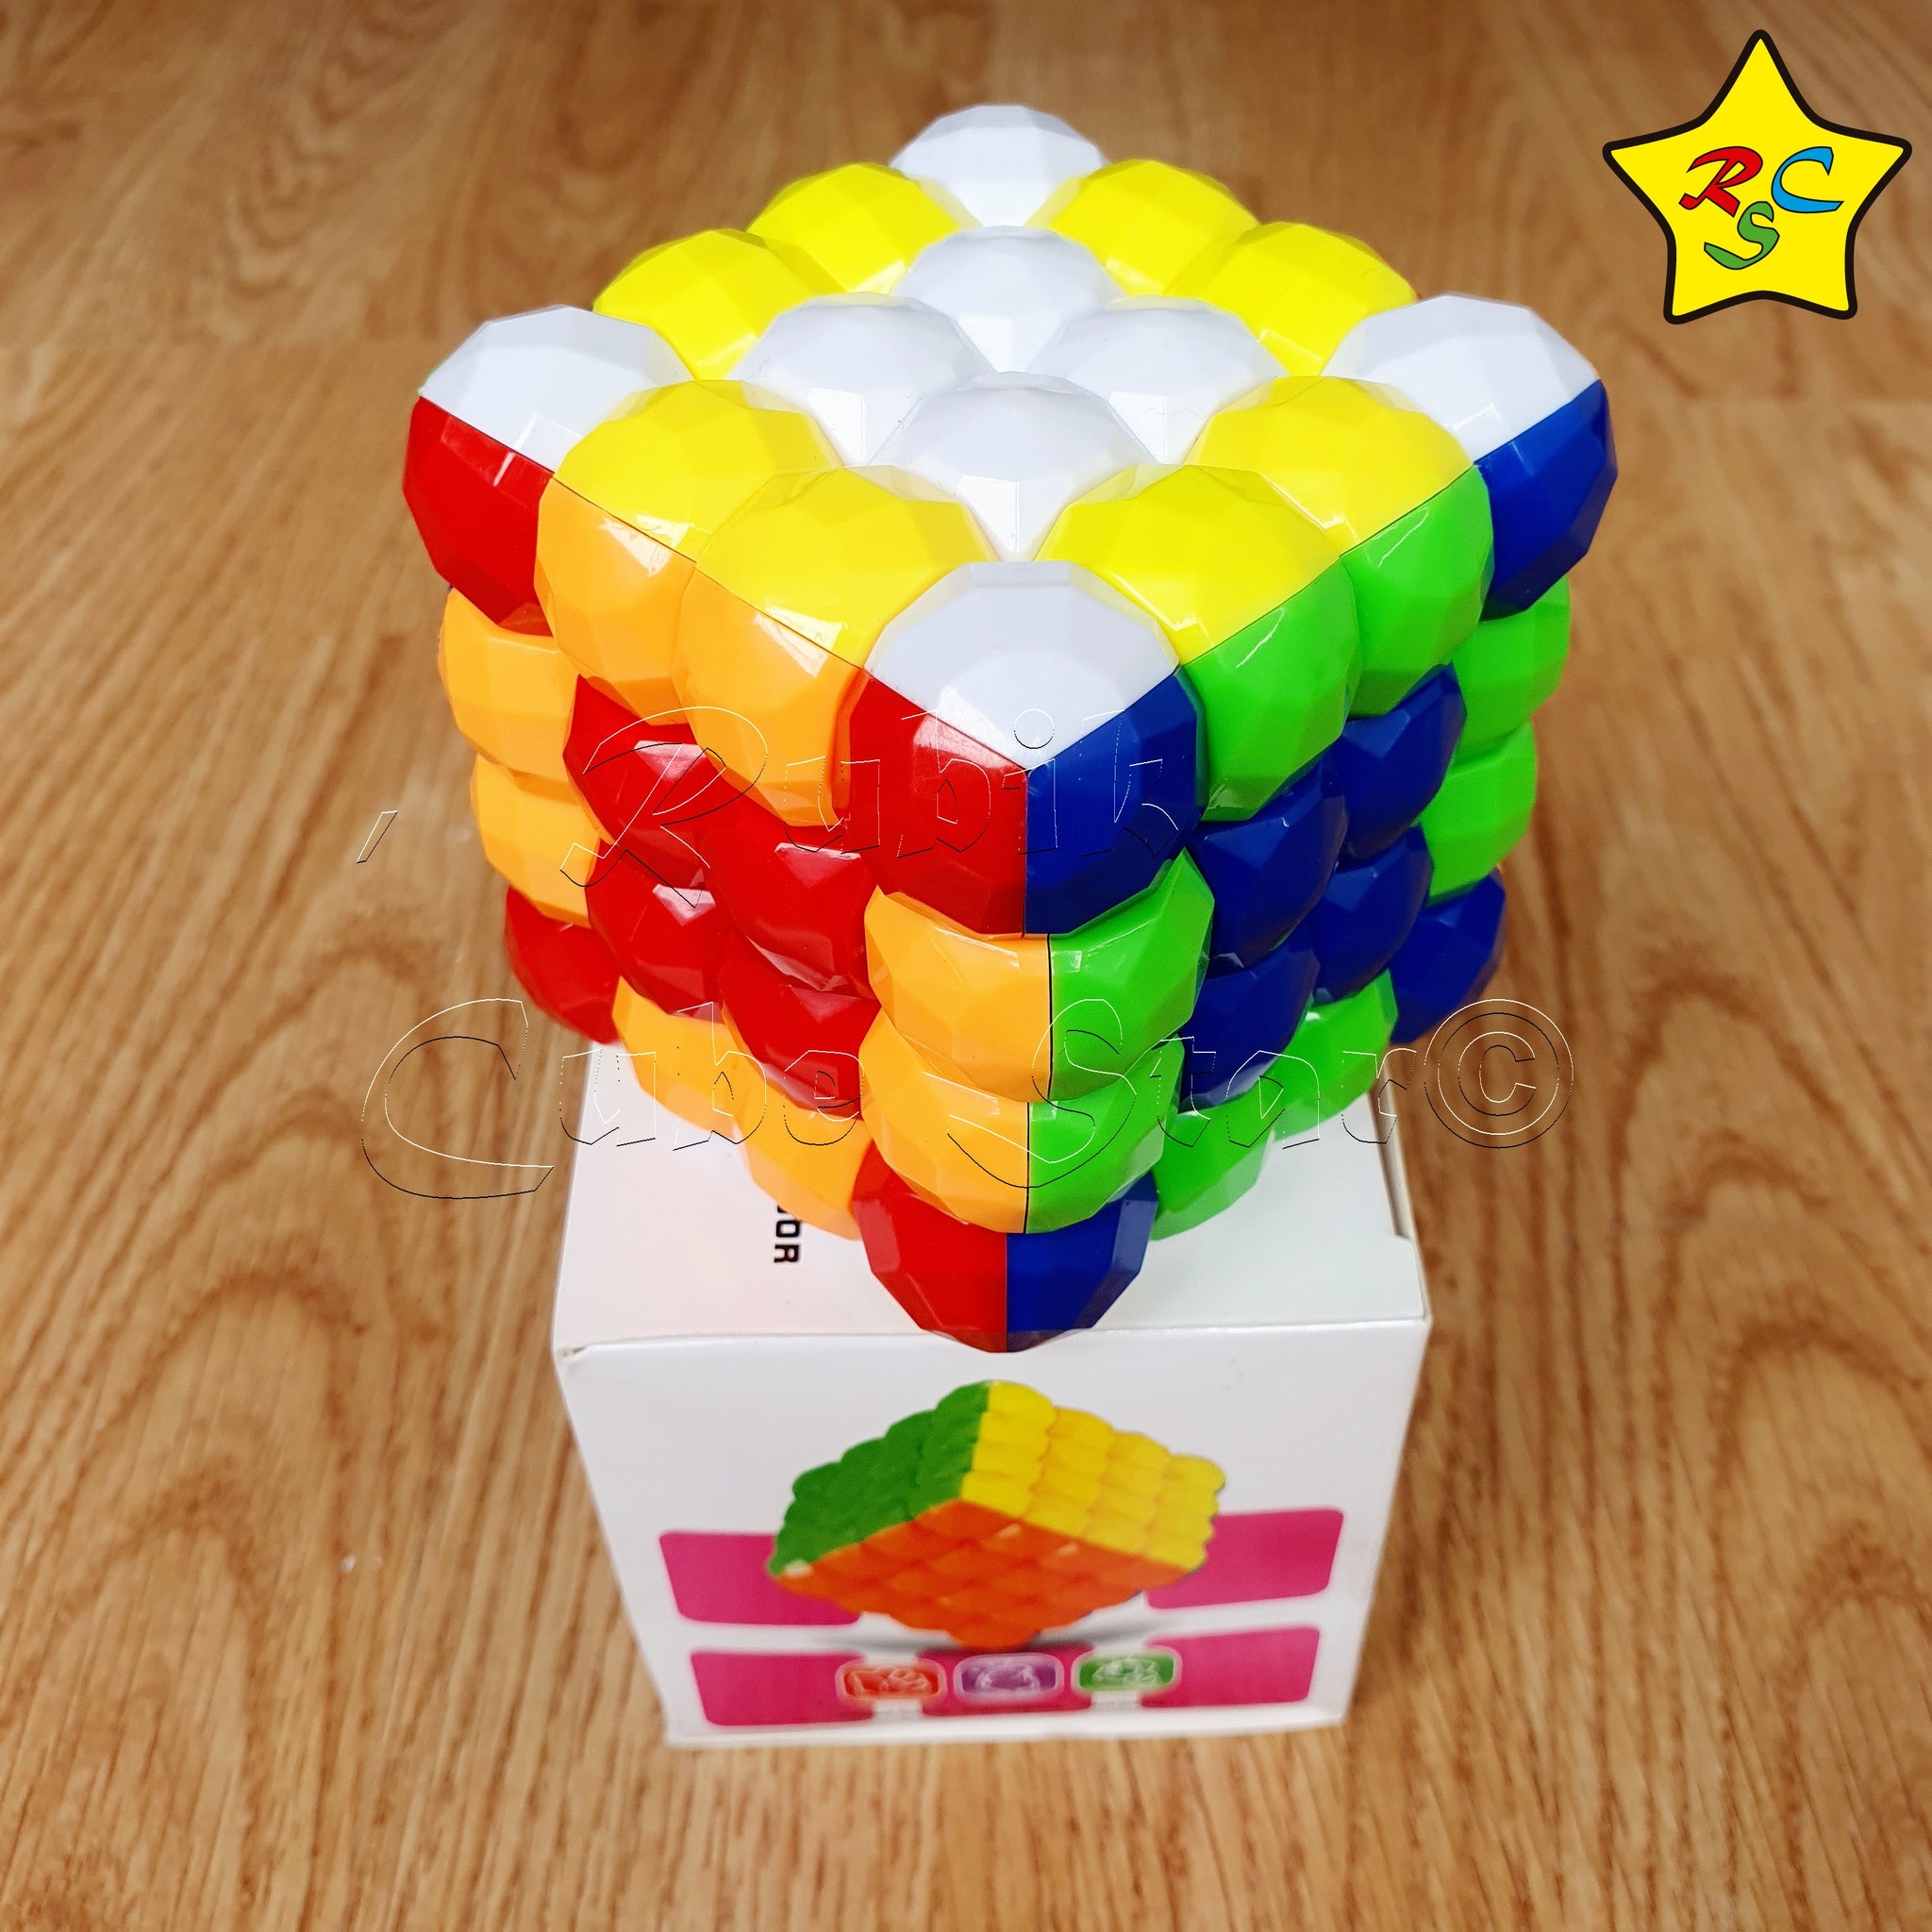 4x4 Cubo De Rubik Cubo Rubik 4x4 Esferas Pixelado Stickerless Magic Cube Pepas – Rubik Cube  Star